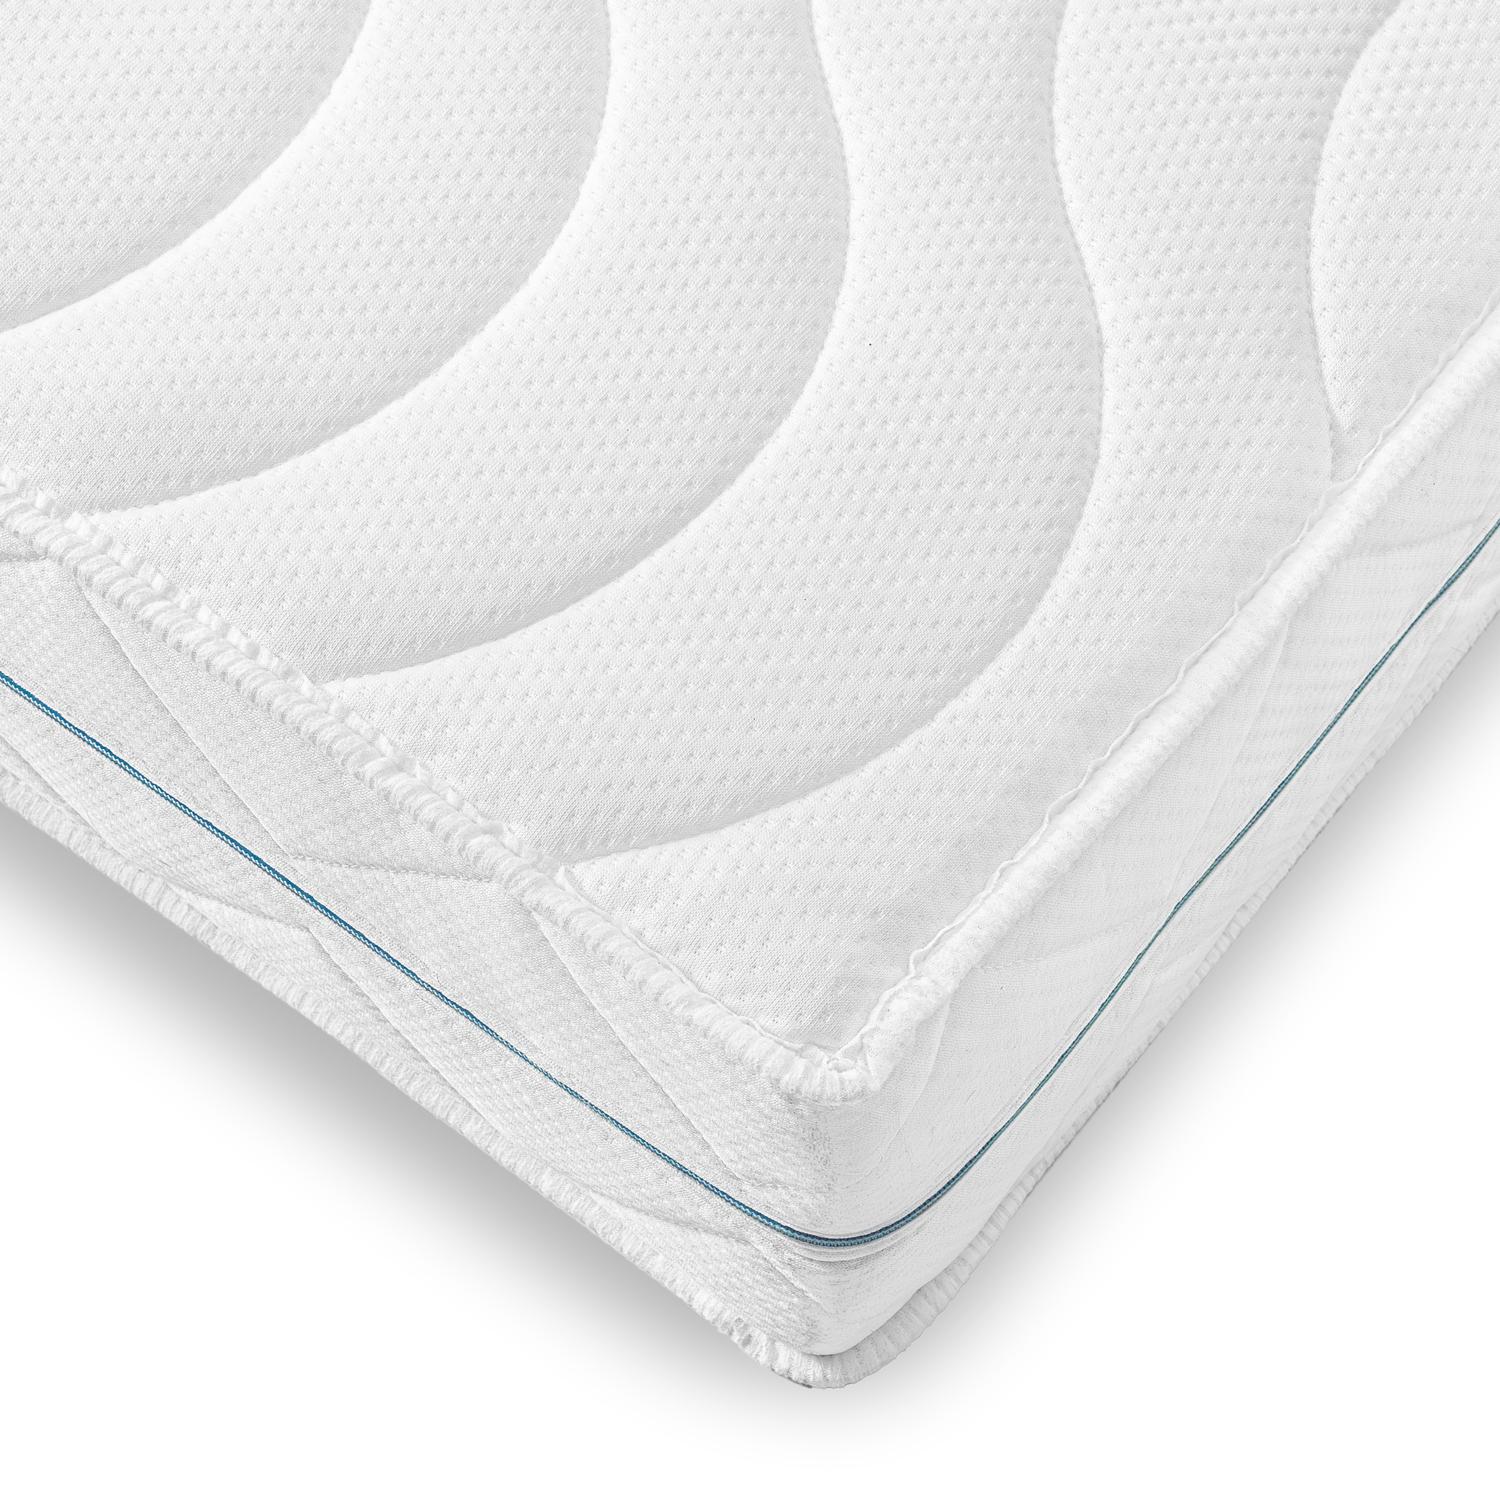 Supportho Premium mattress cover 160 x 200 cm, height 18 cm